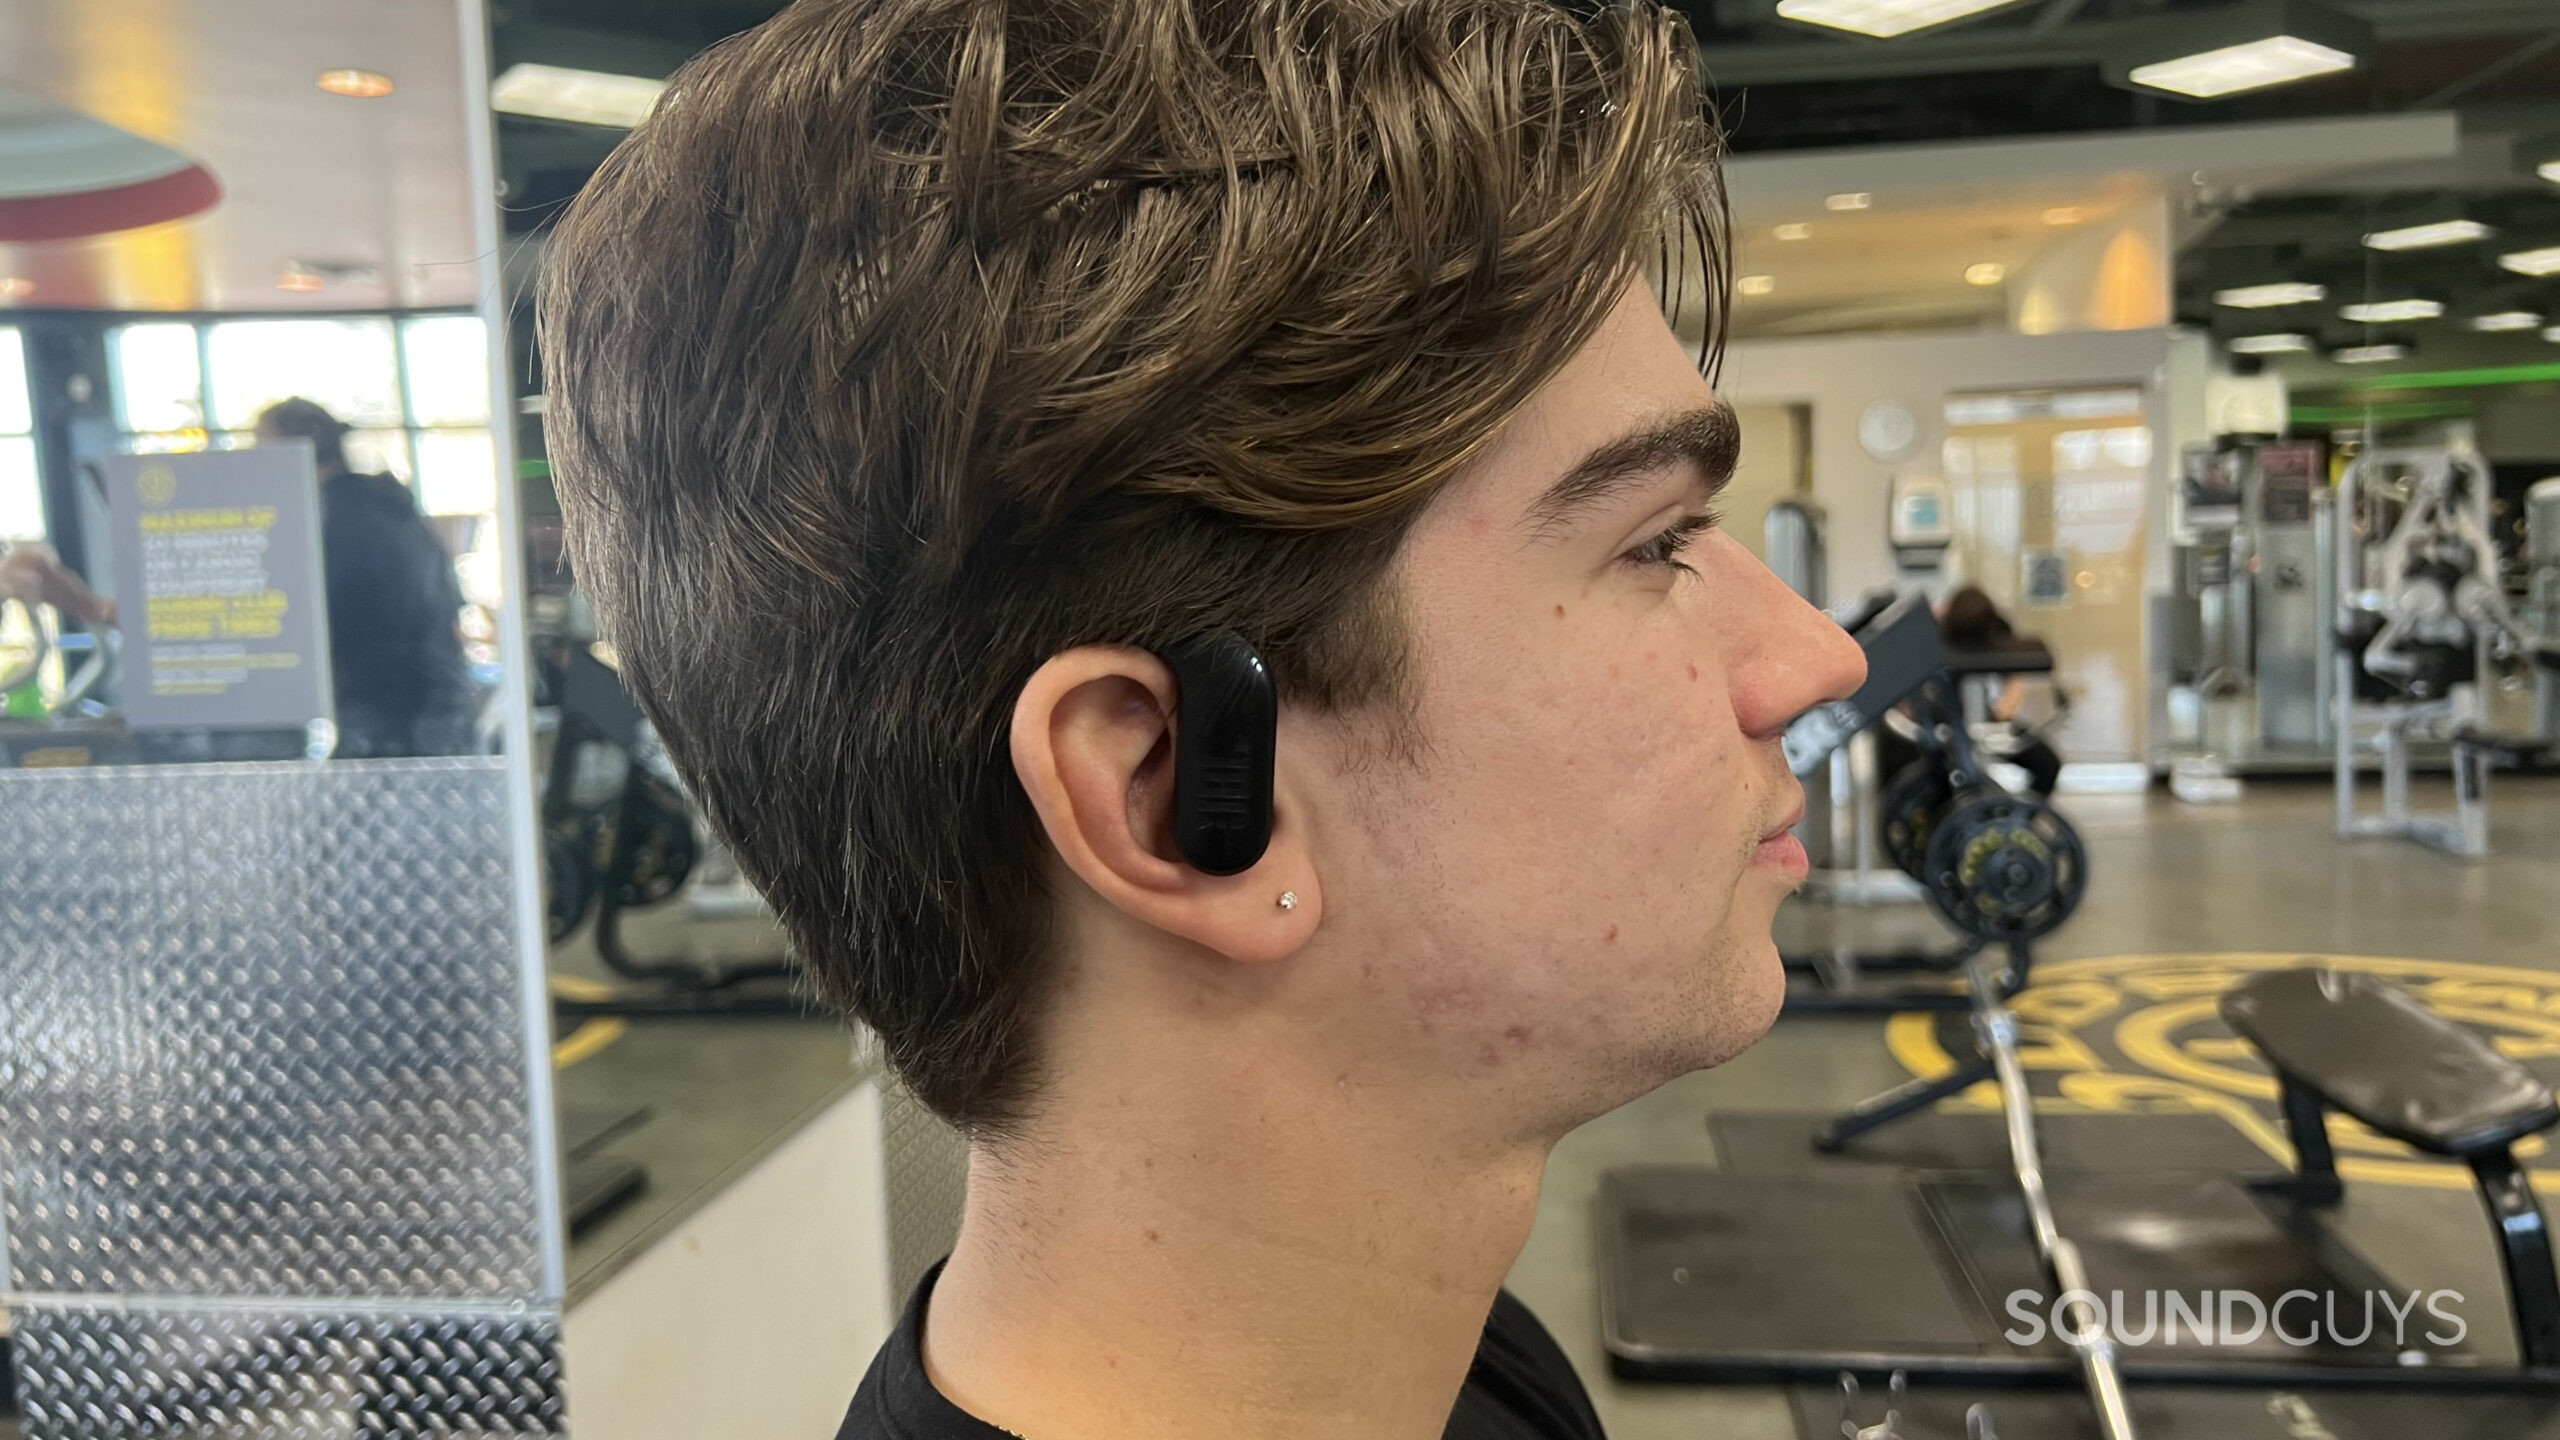 JBL AirPods Endurance Peak 3 In-Ear Headphones With 50-Hour Battery Life -  Black - Tknogy